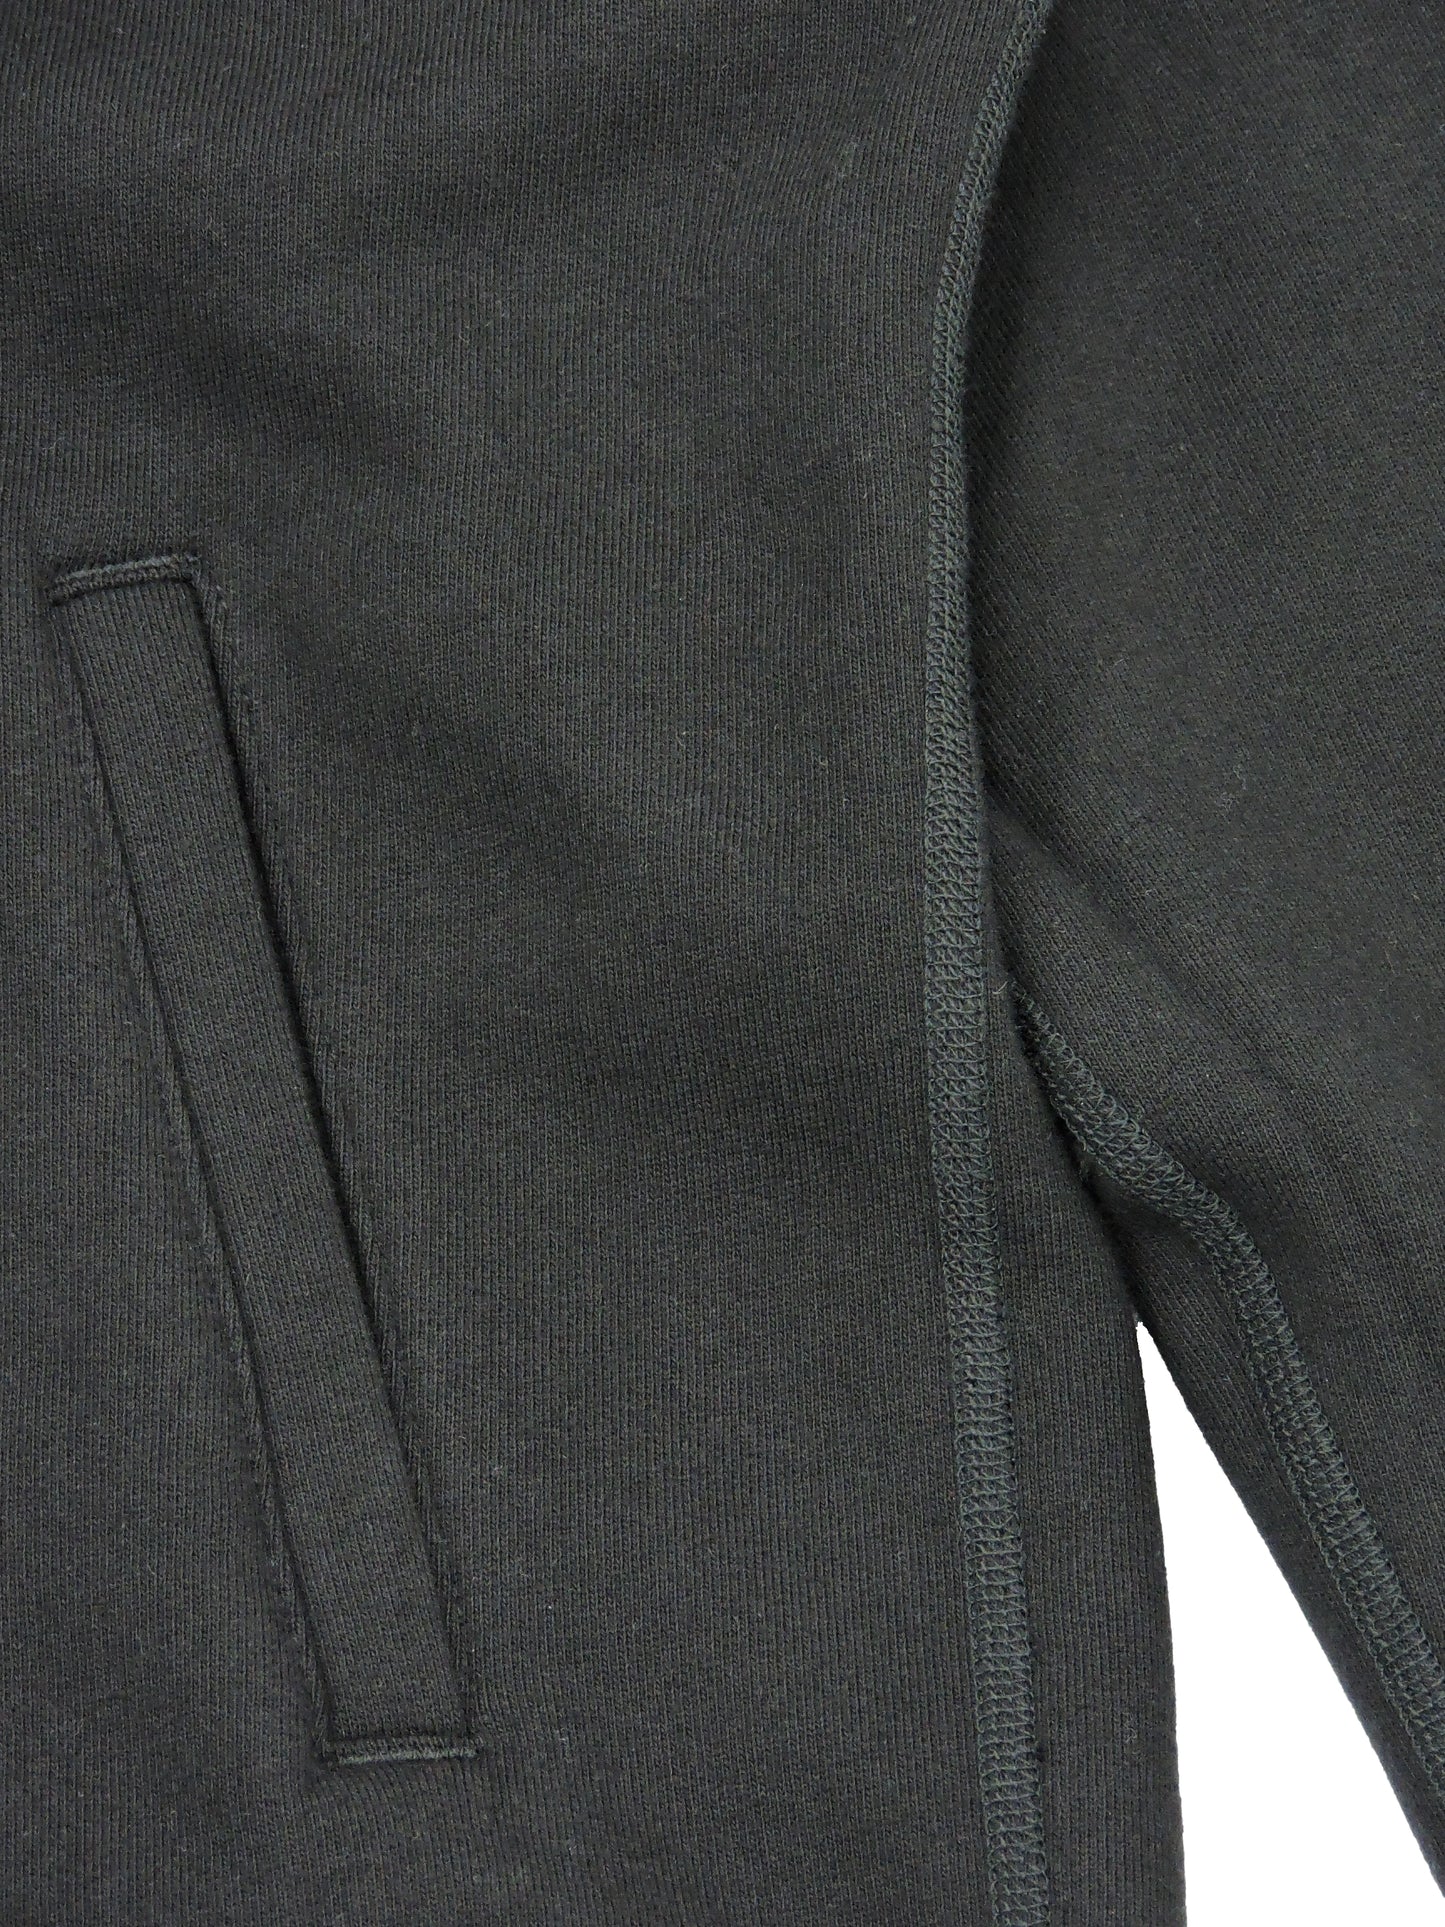 Close up of fleece fabric material